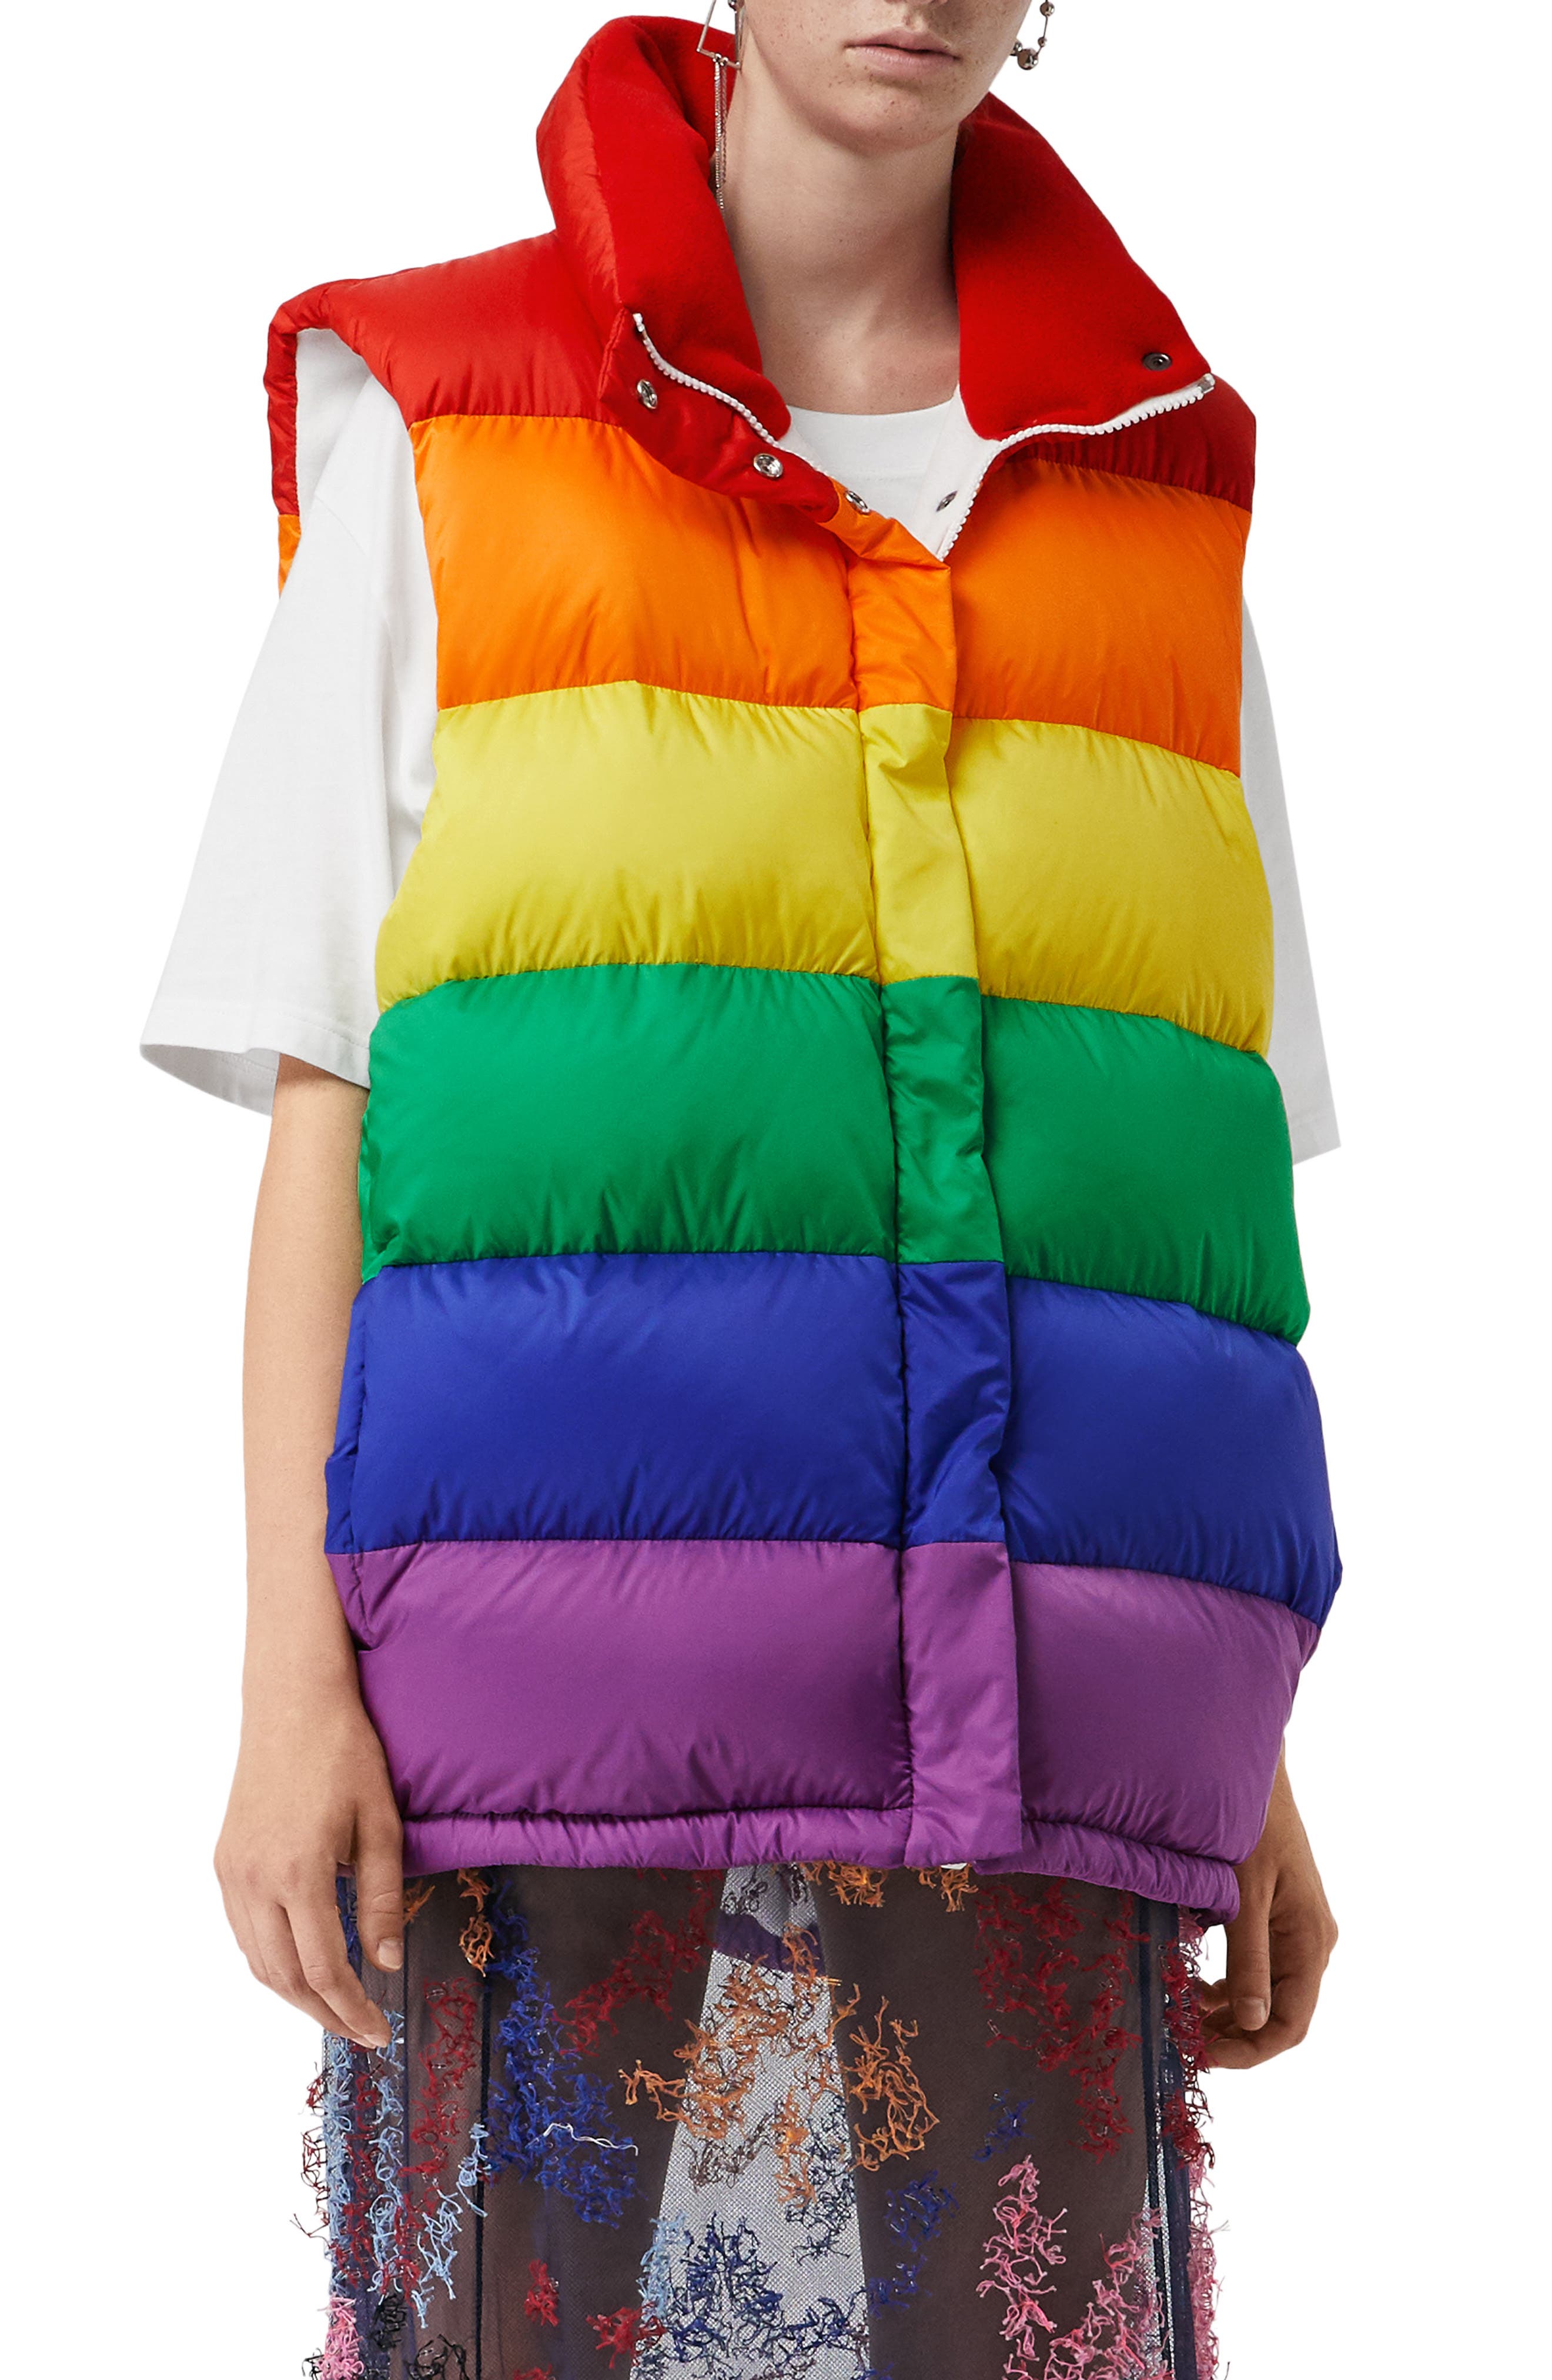 burberry rainbow puffer jacket